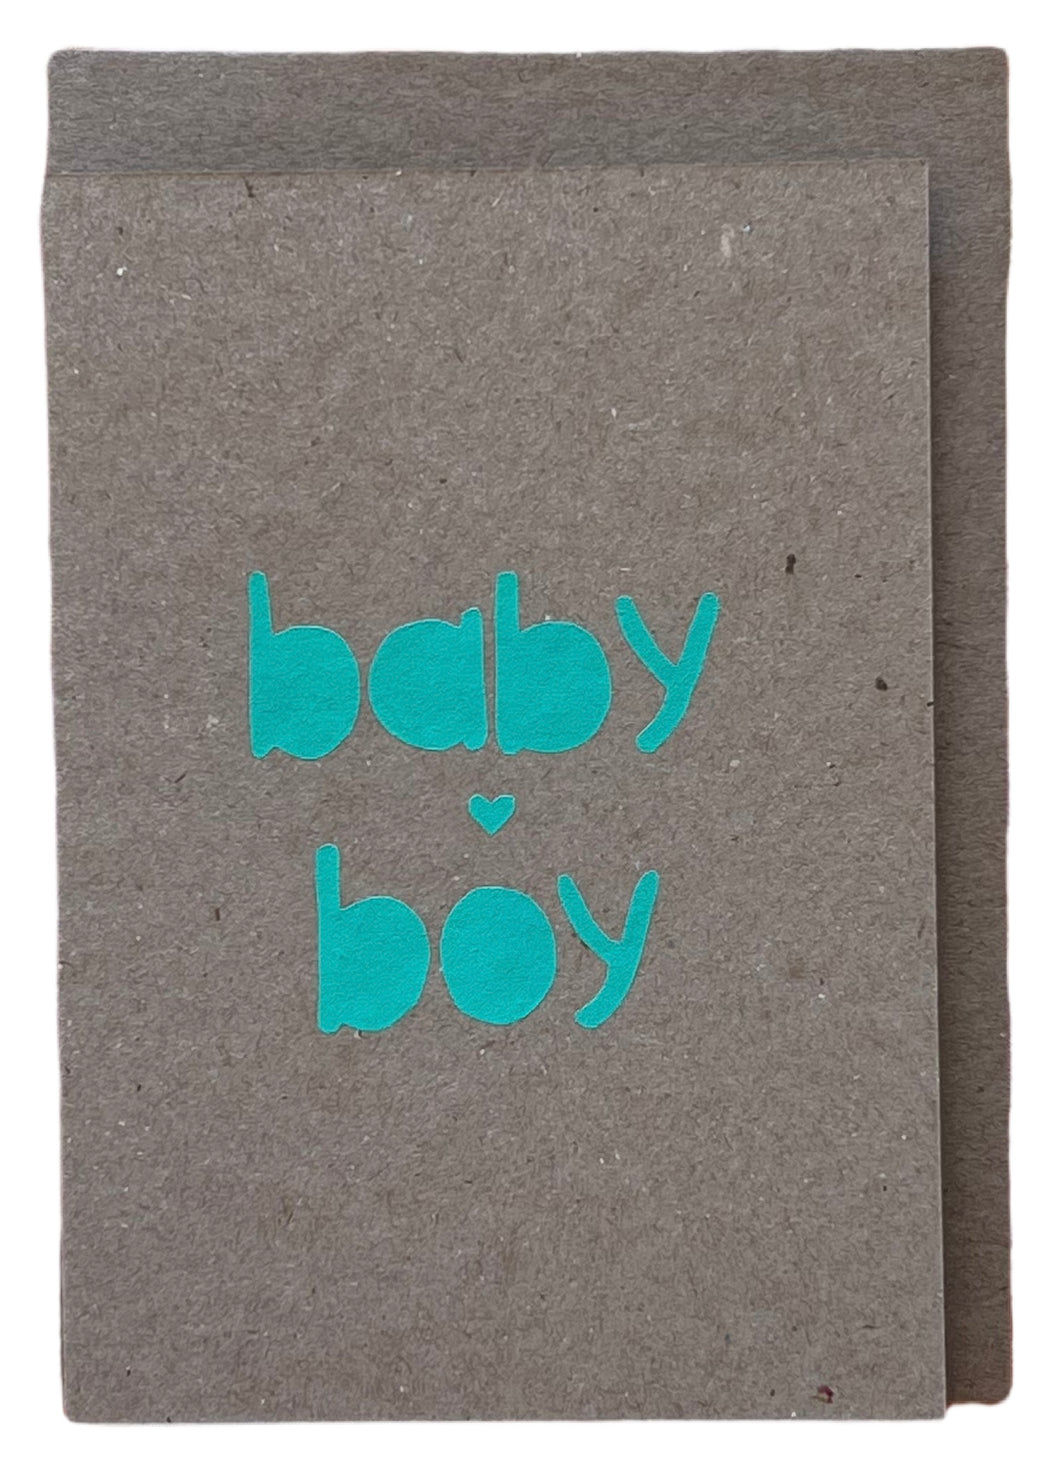 BABY BOY - Bright Aqua